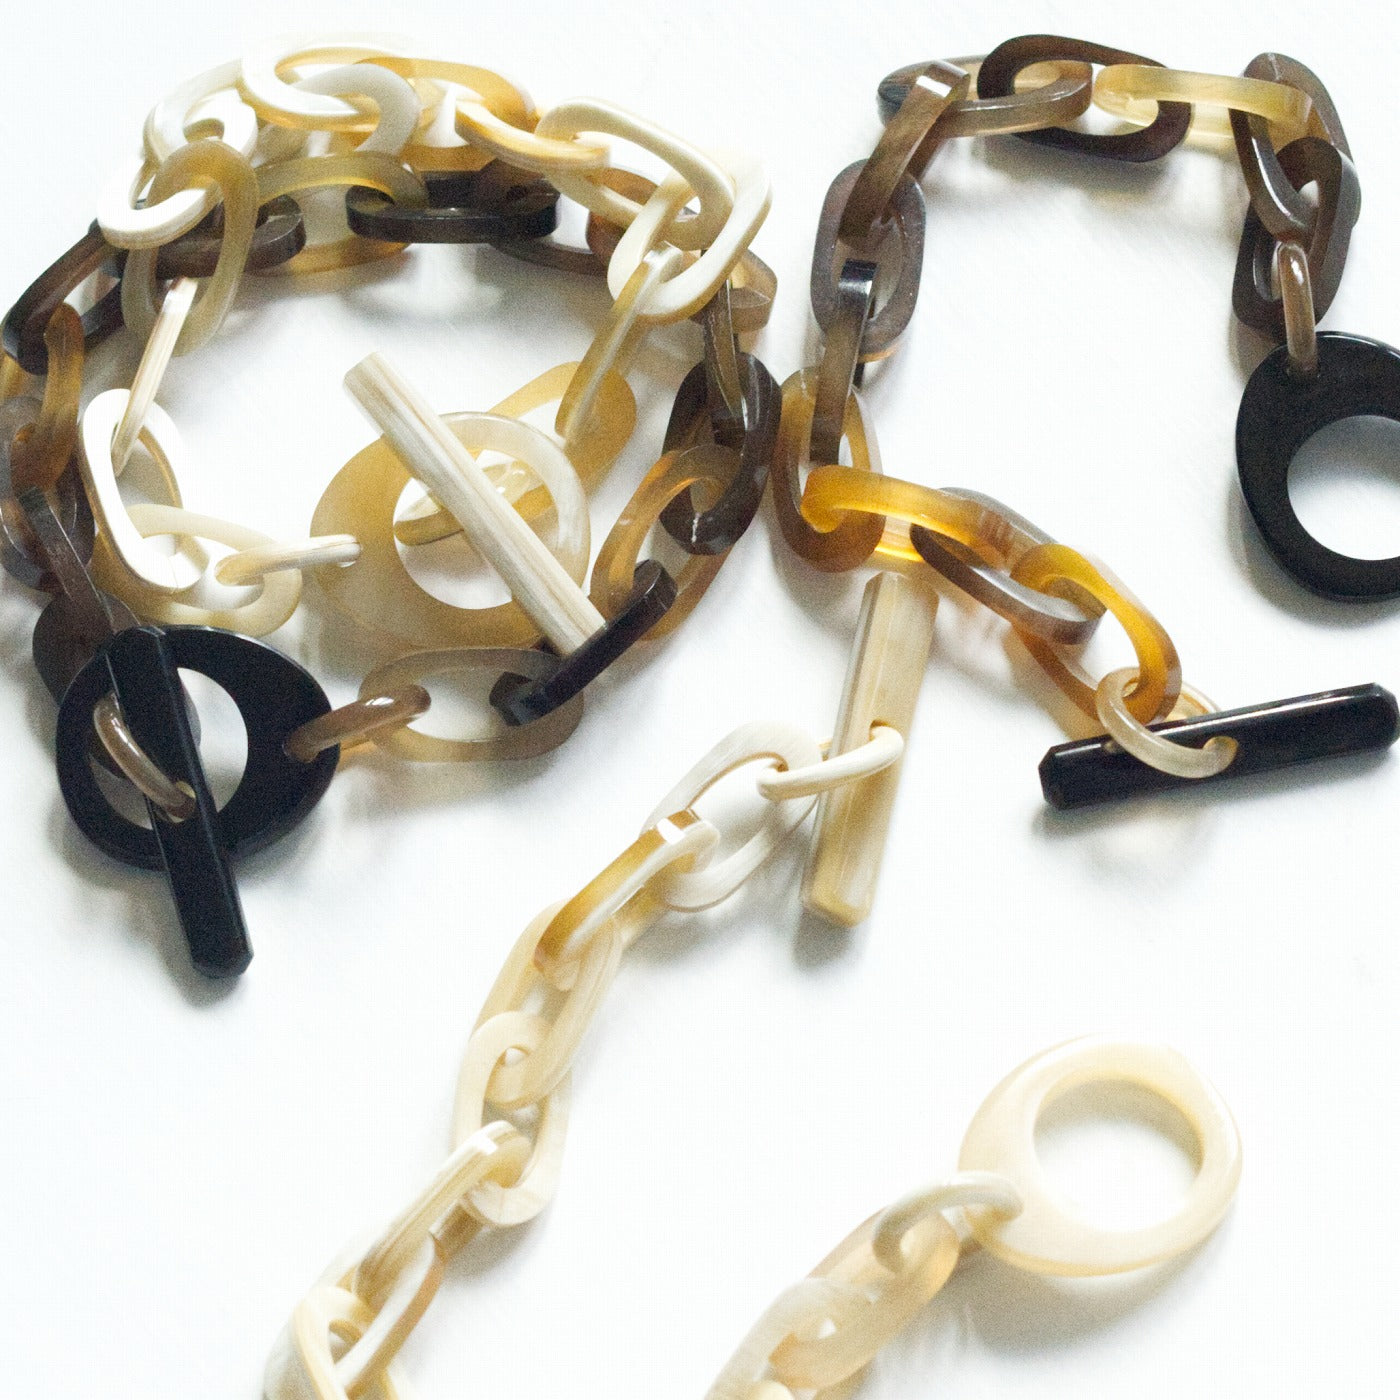 Chains bracelet